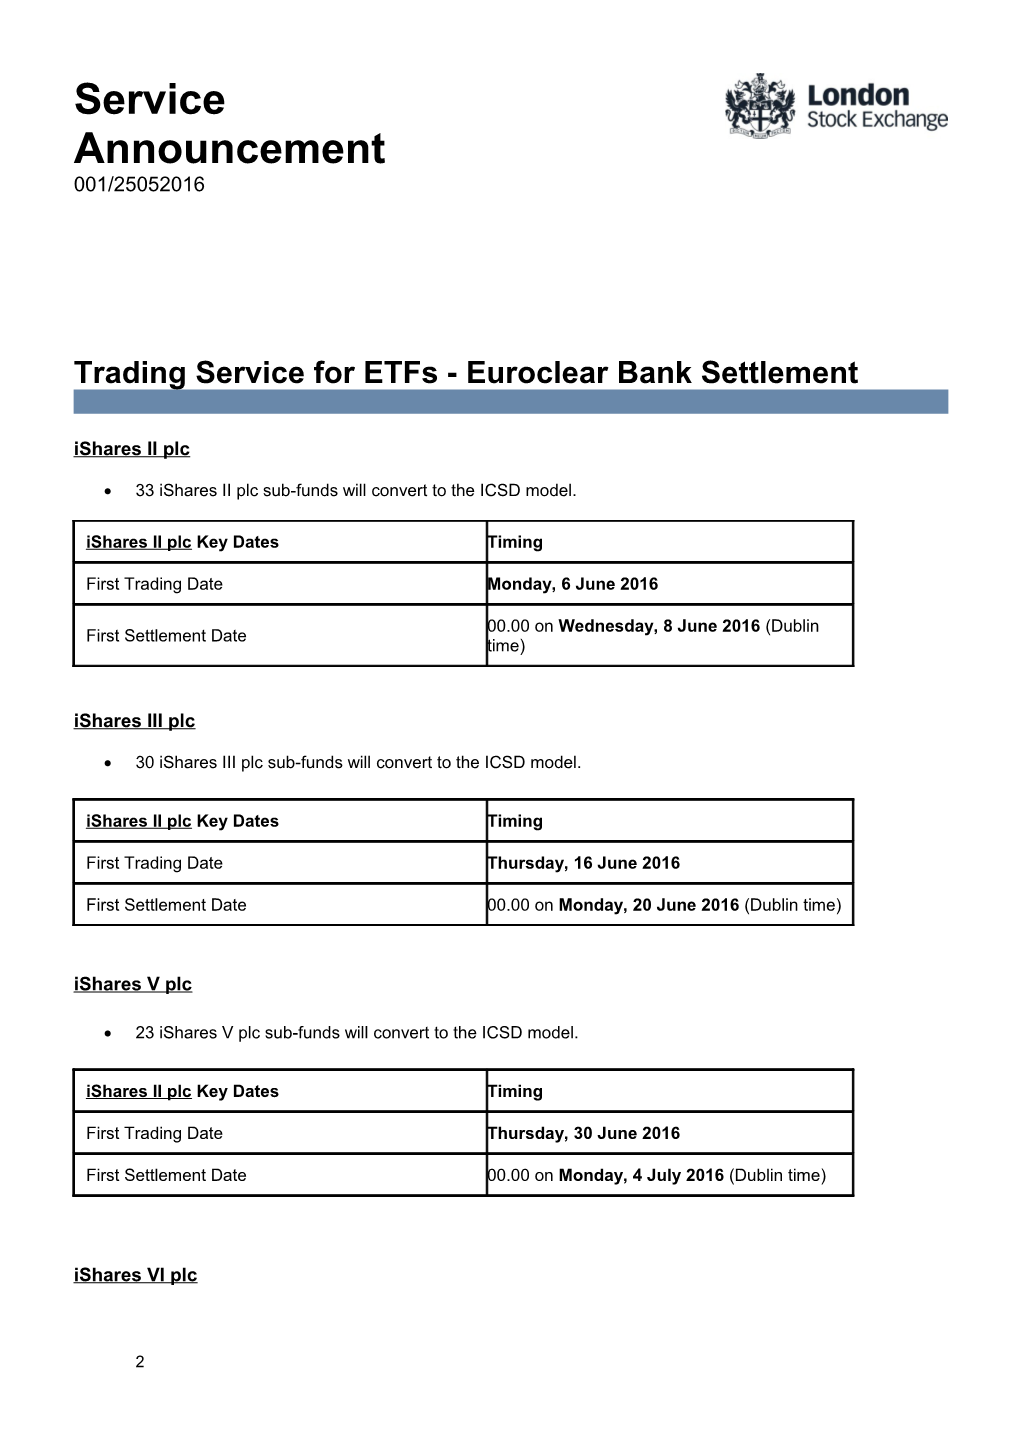 Trading Service for Etfs - Euroclear Bank Settlement Segments